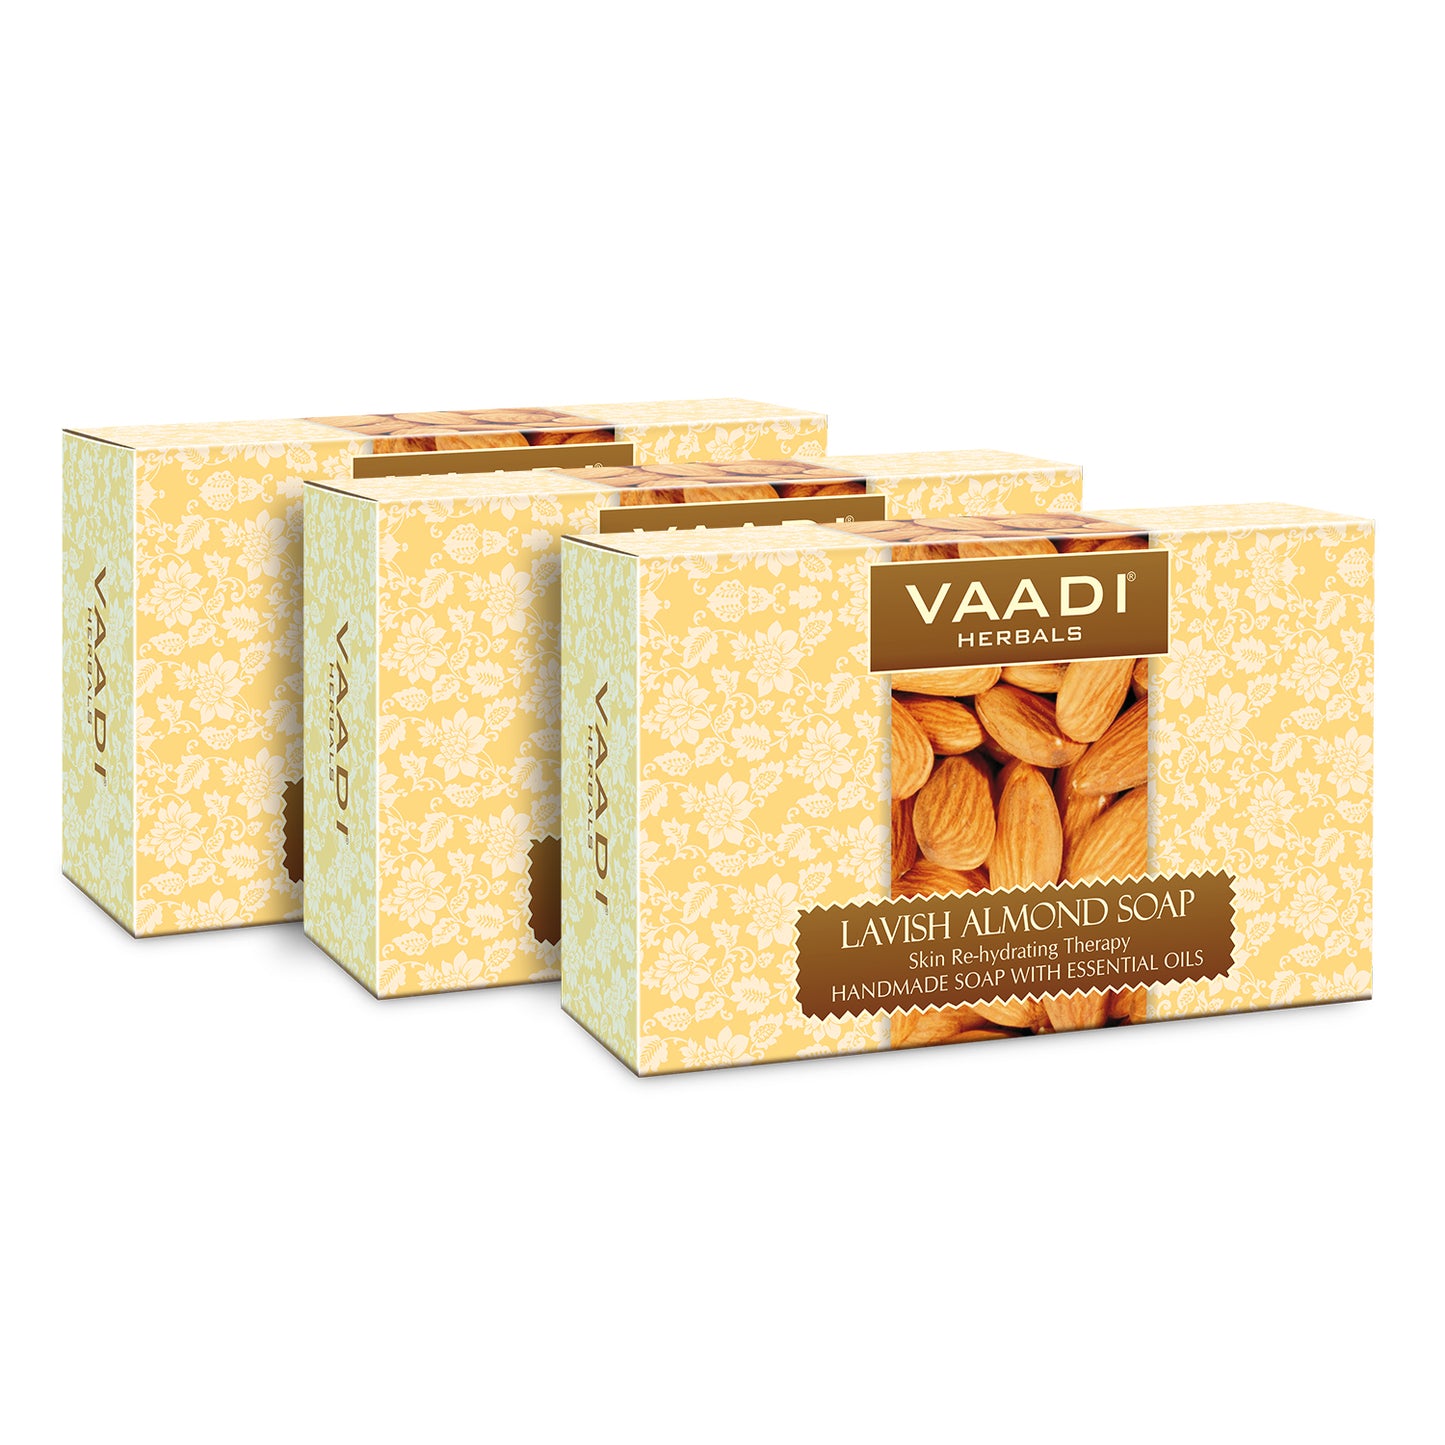 Rehydrating Organic Lavish Almond Soap with Honey & Aloe Vera - Improves Complexion - Keeps Skin Nourished (3 x 75 gms/2.7 oz)